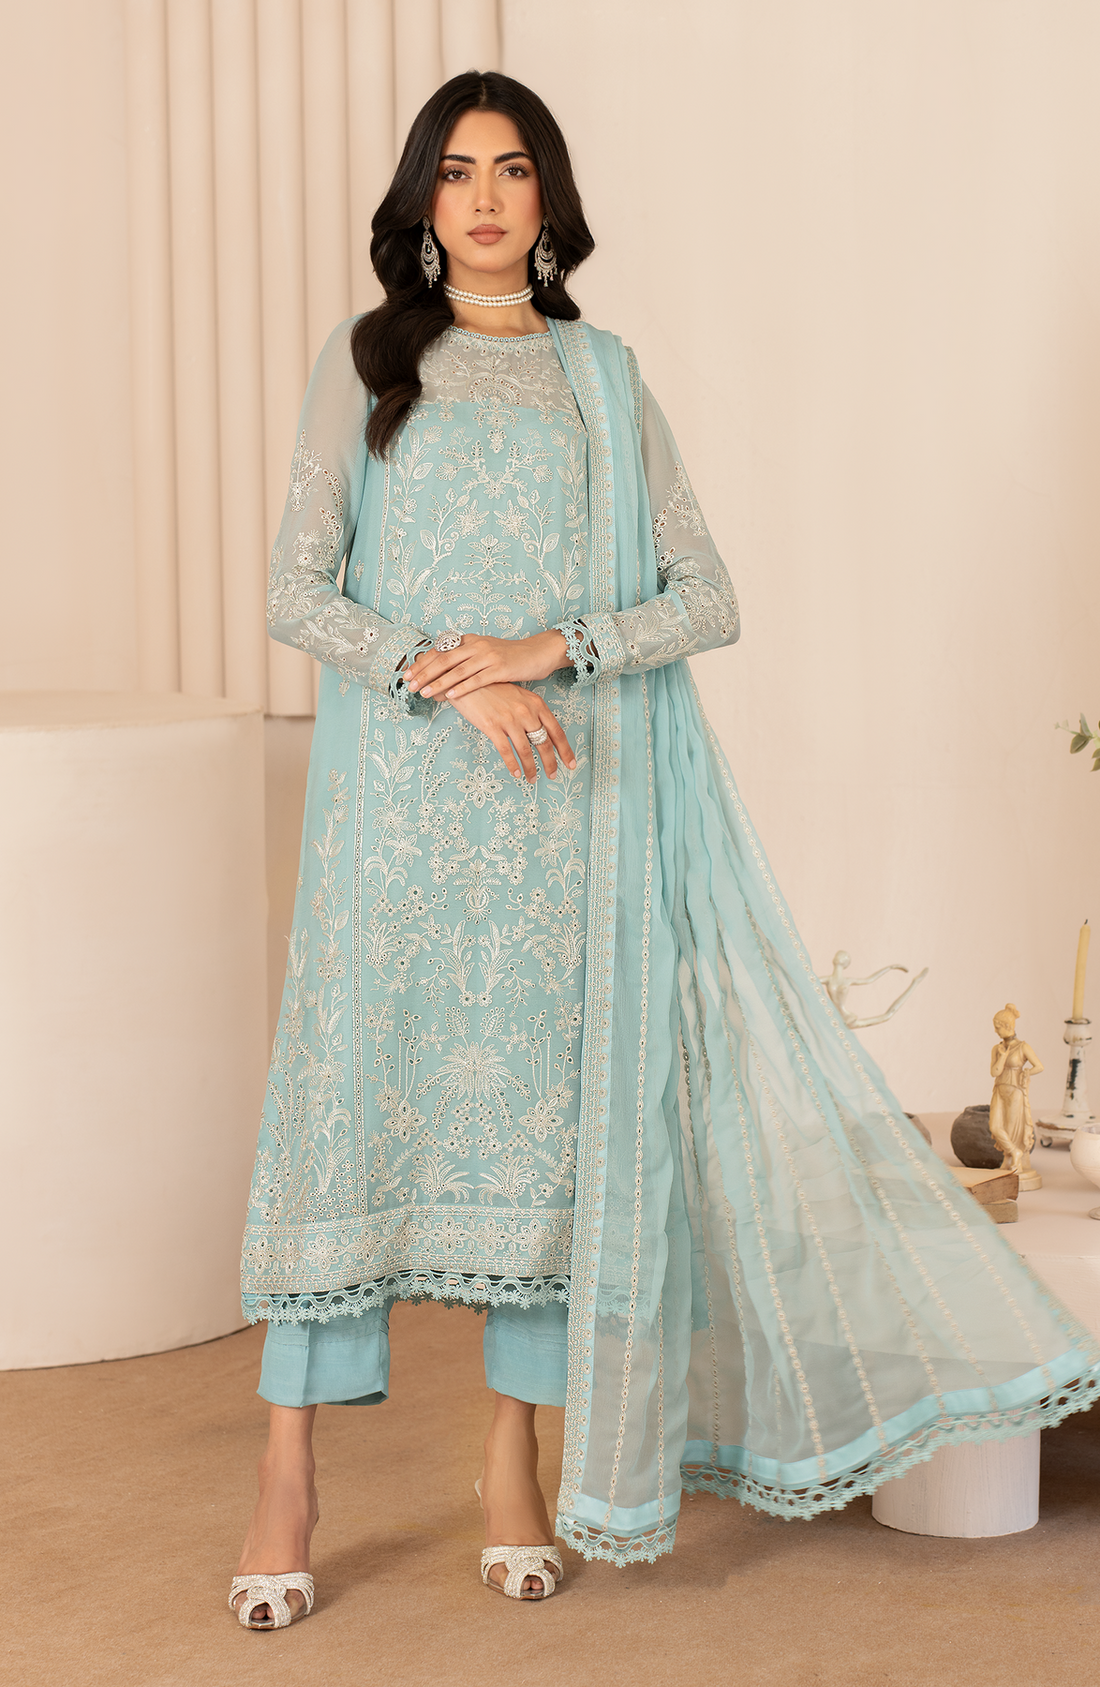 Zarif | Chiffon Edit  | ZL 02 SAHIBA - Khanumjan  Pakistani Clothes and Designer Dresses in UK, USA 